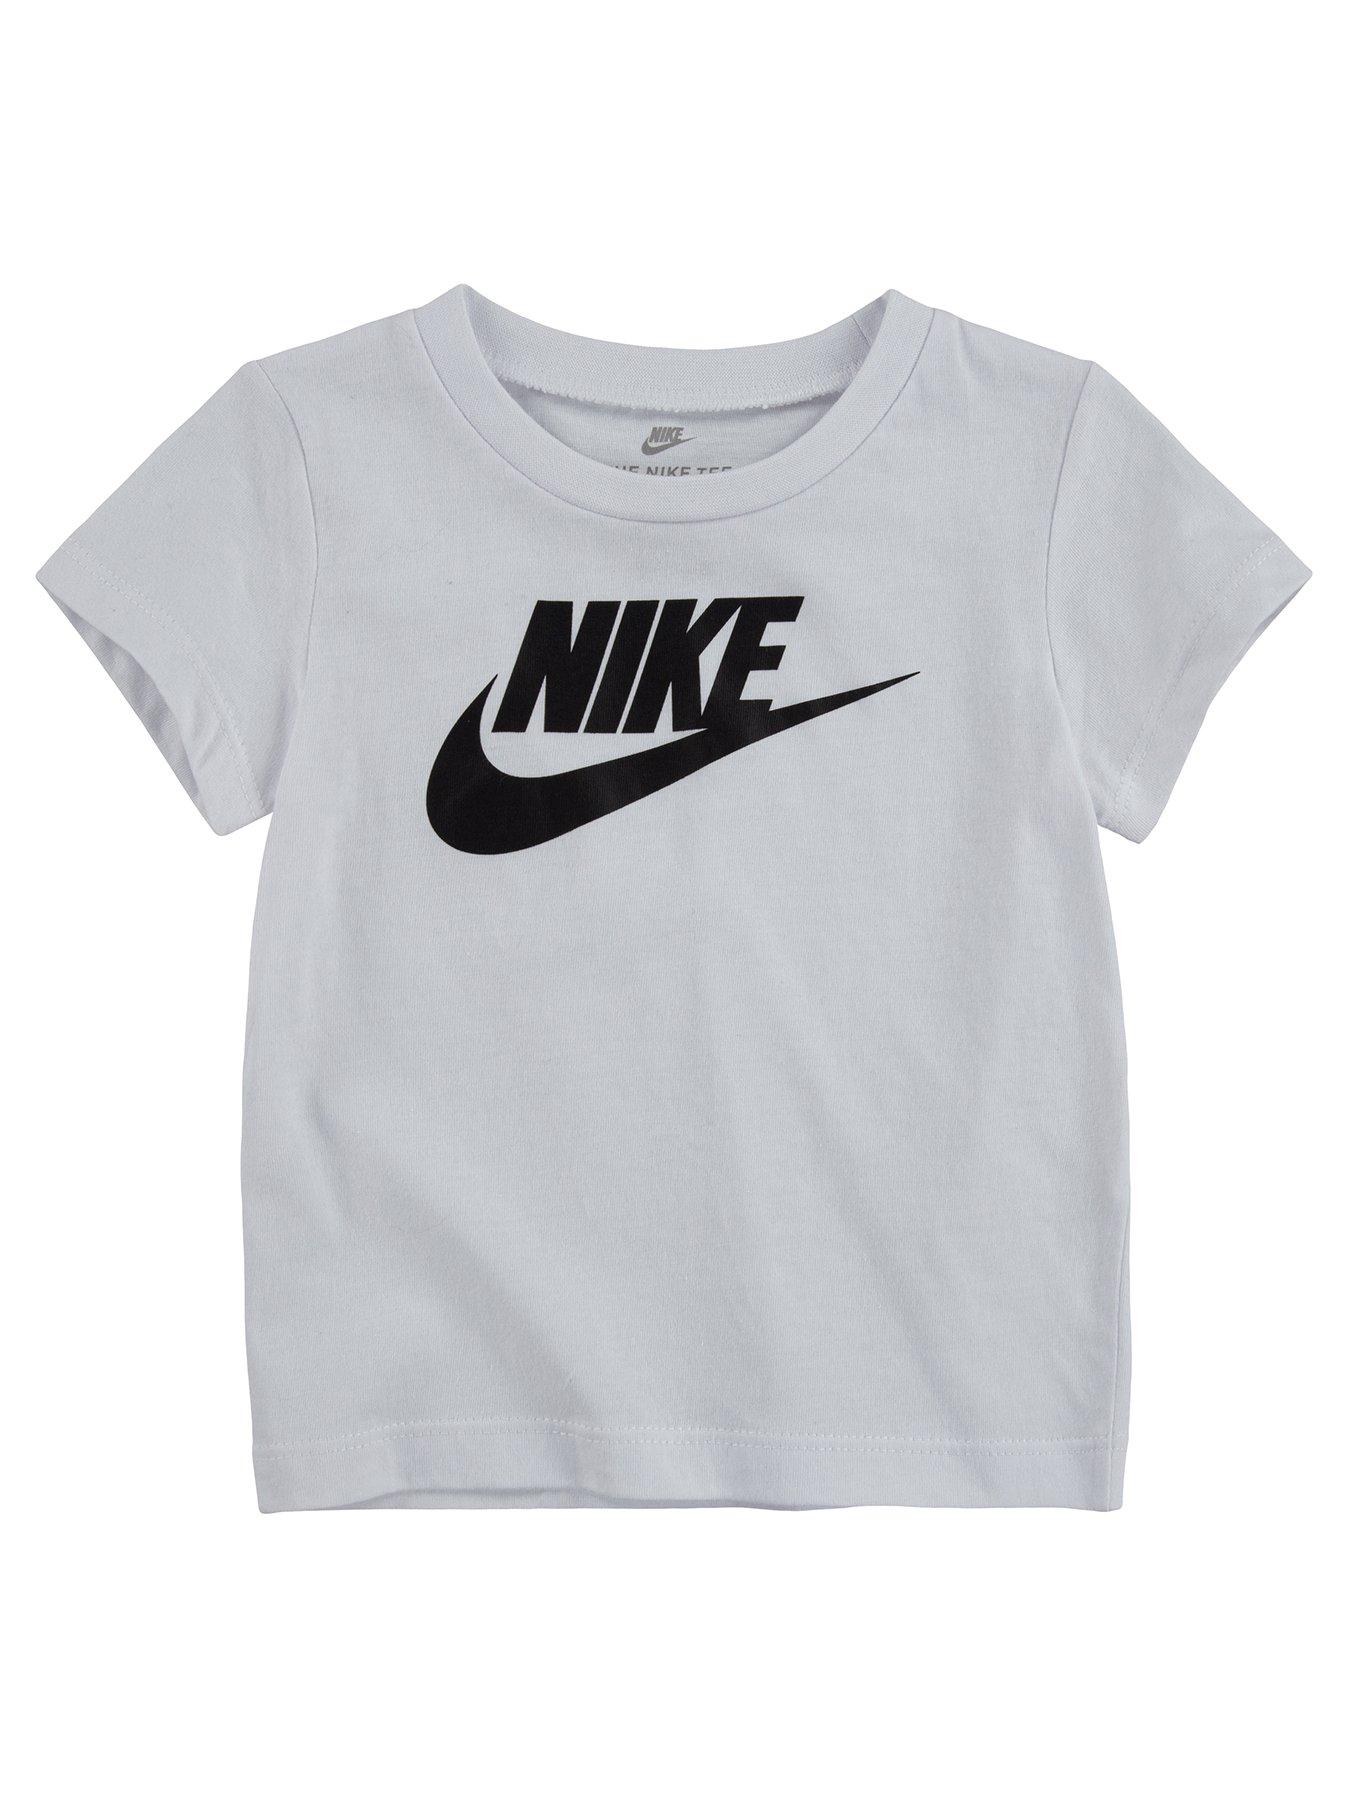 Nike Kids Boys Futura T-Shirt S/S - White, White, Size 2-3 Years